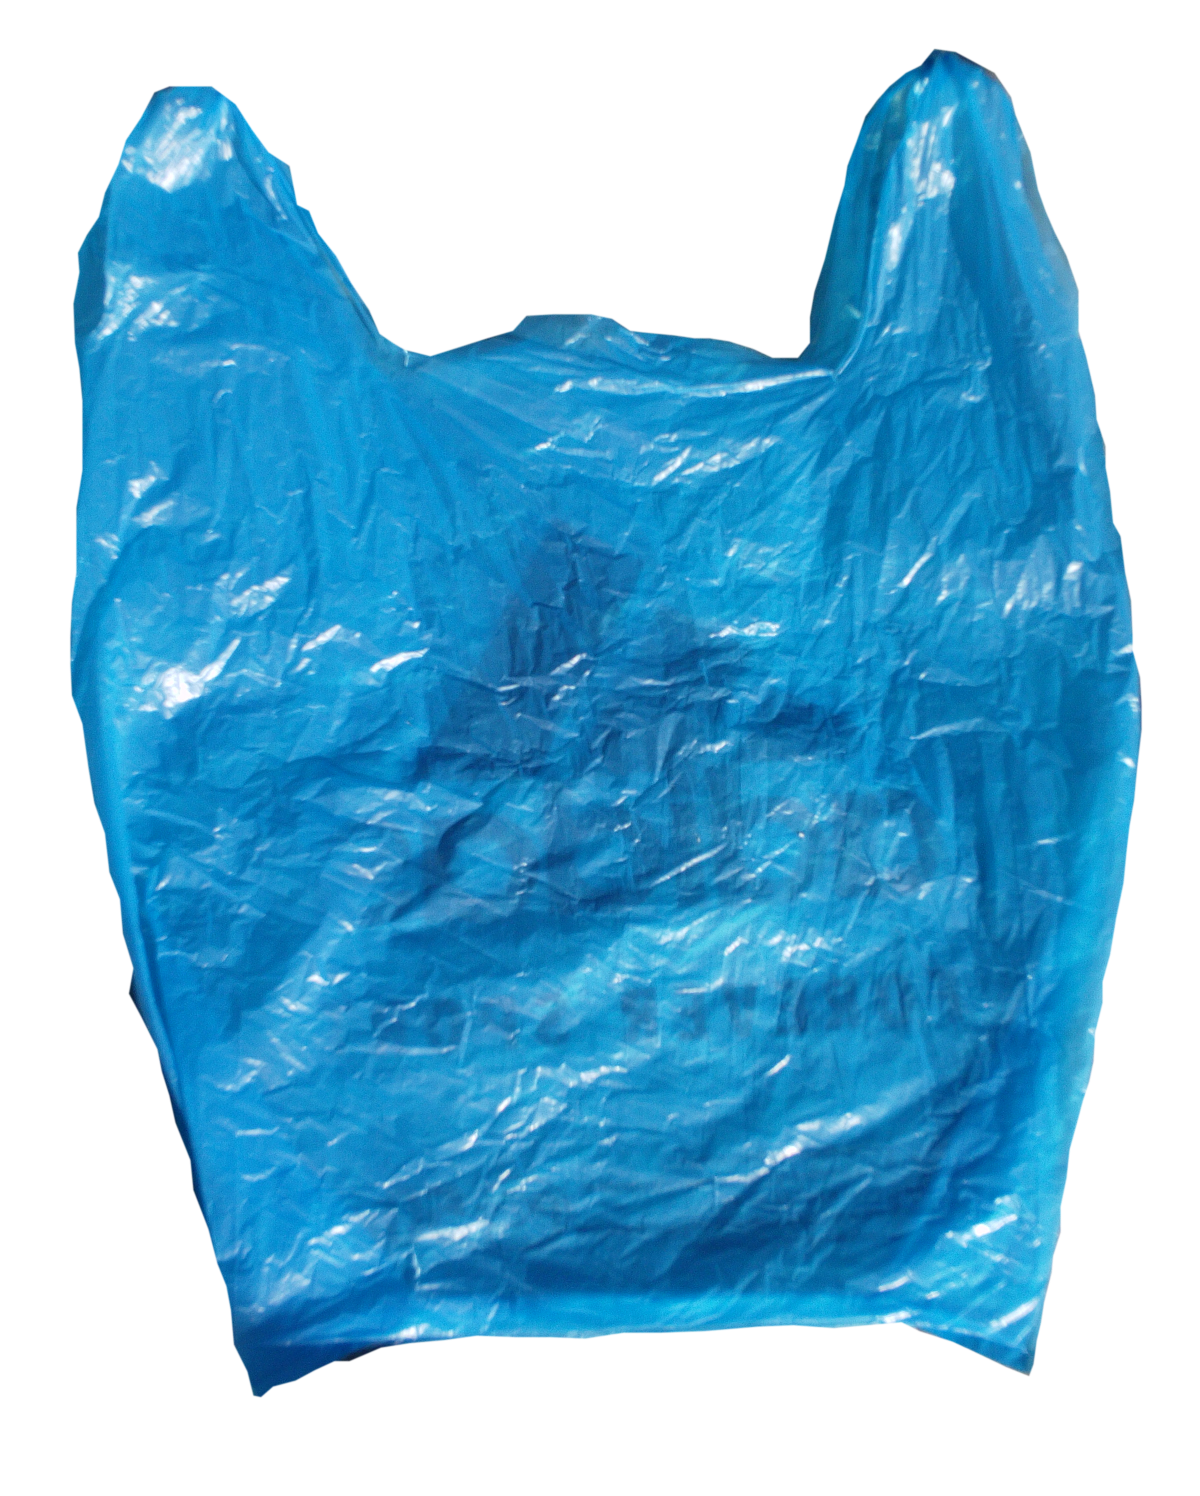 clear plastic bag png